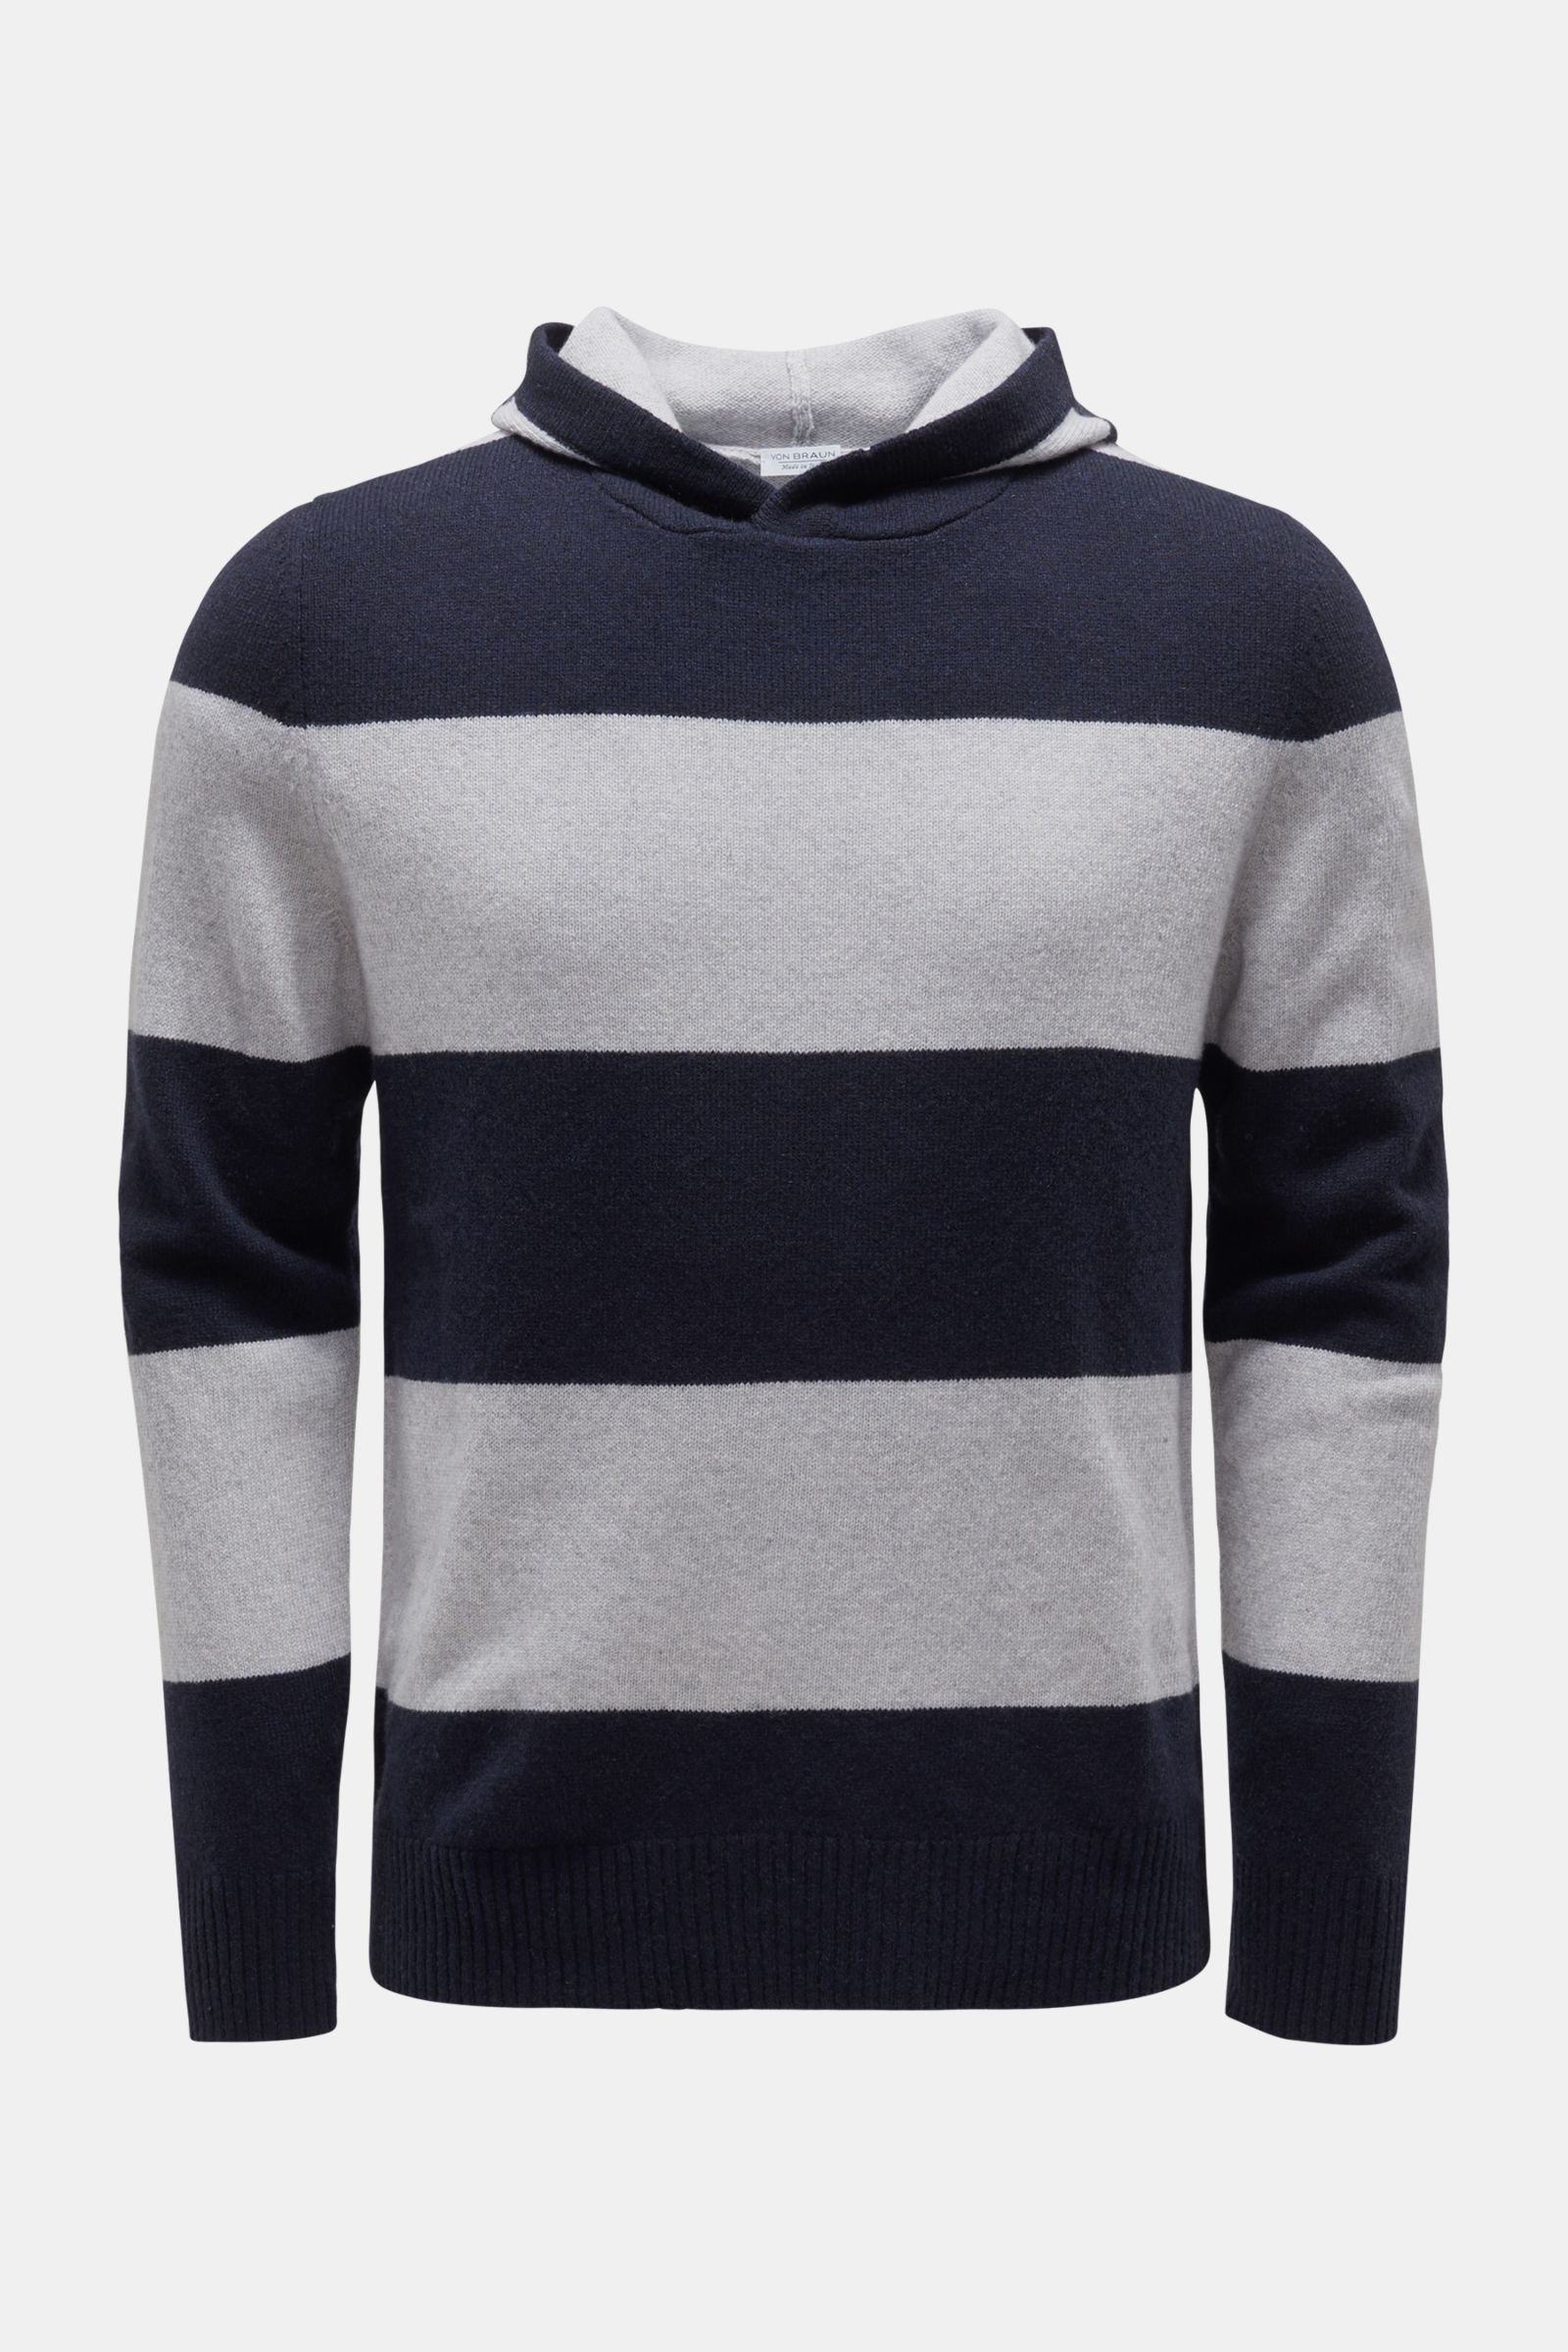 Cashmere hooded jumper navy/light grey striped